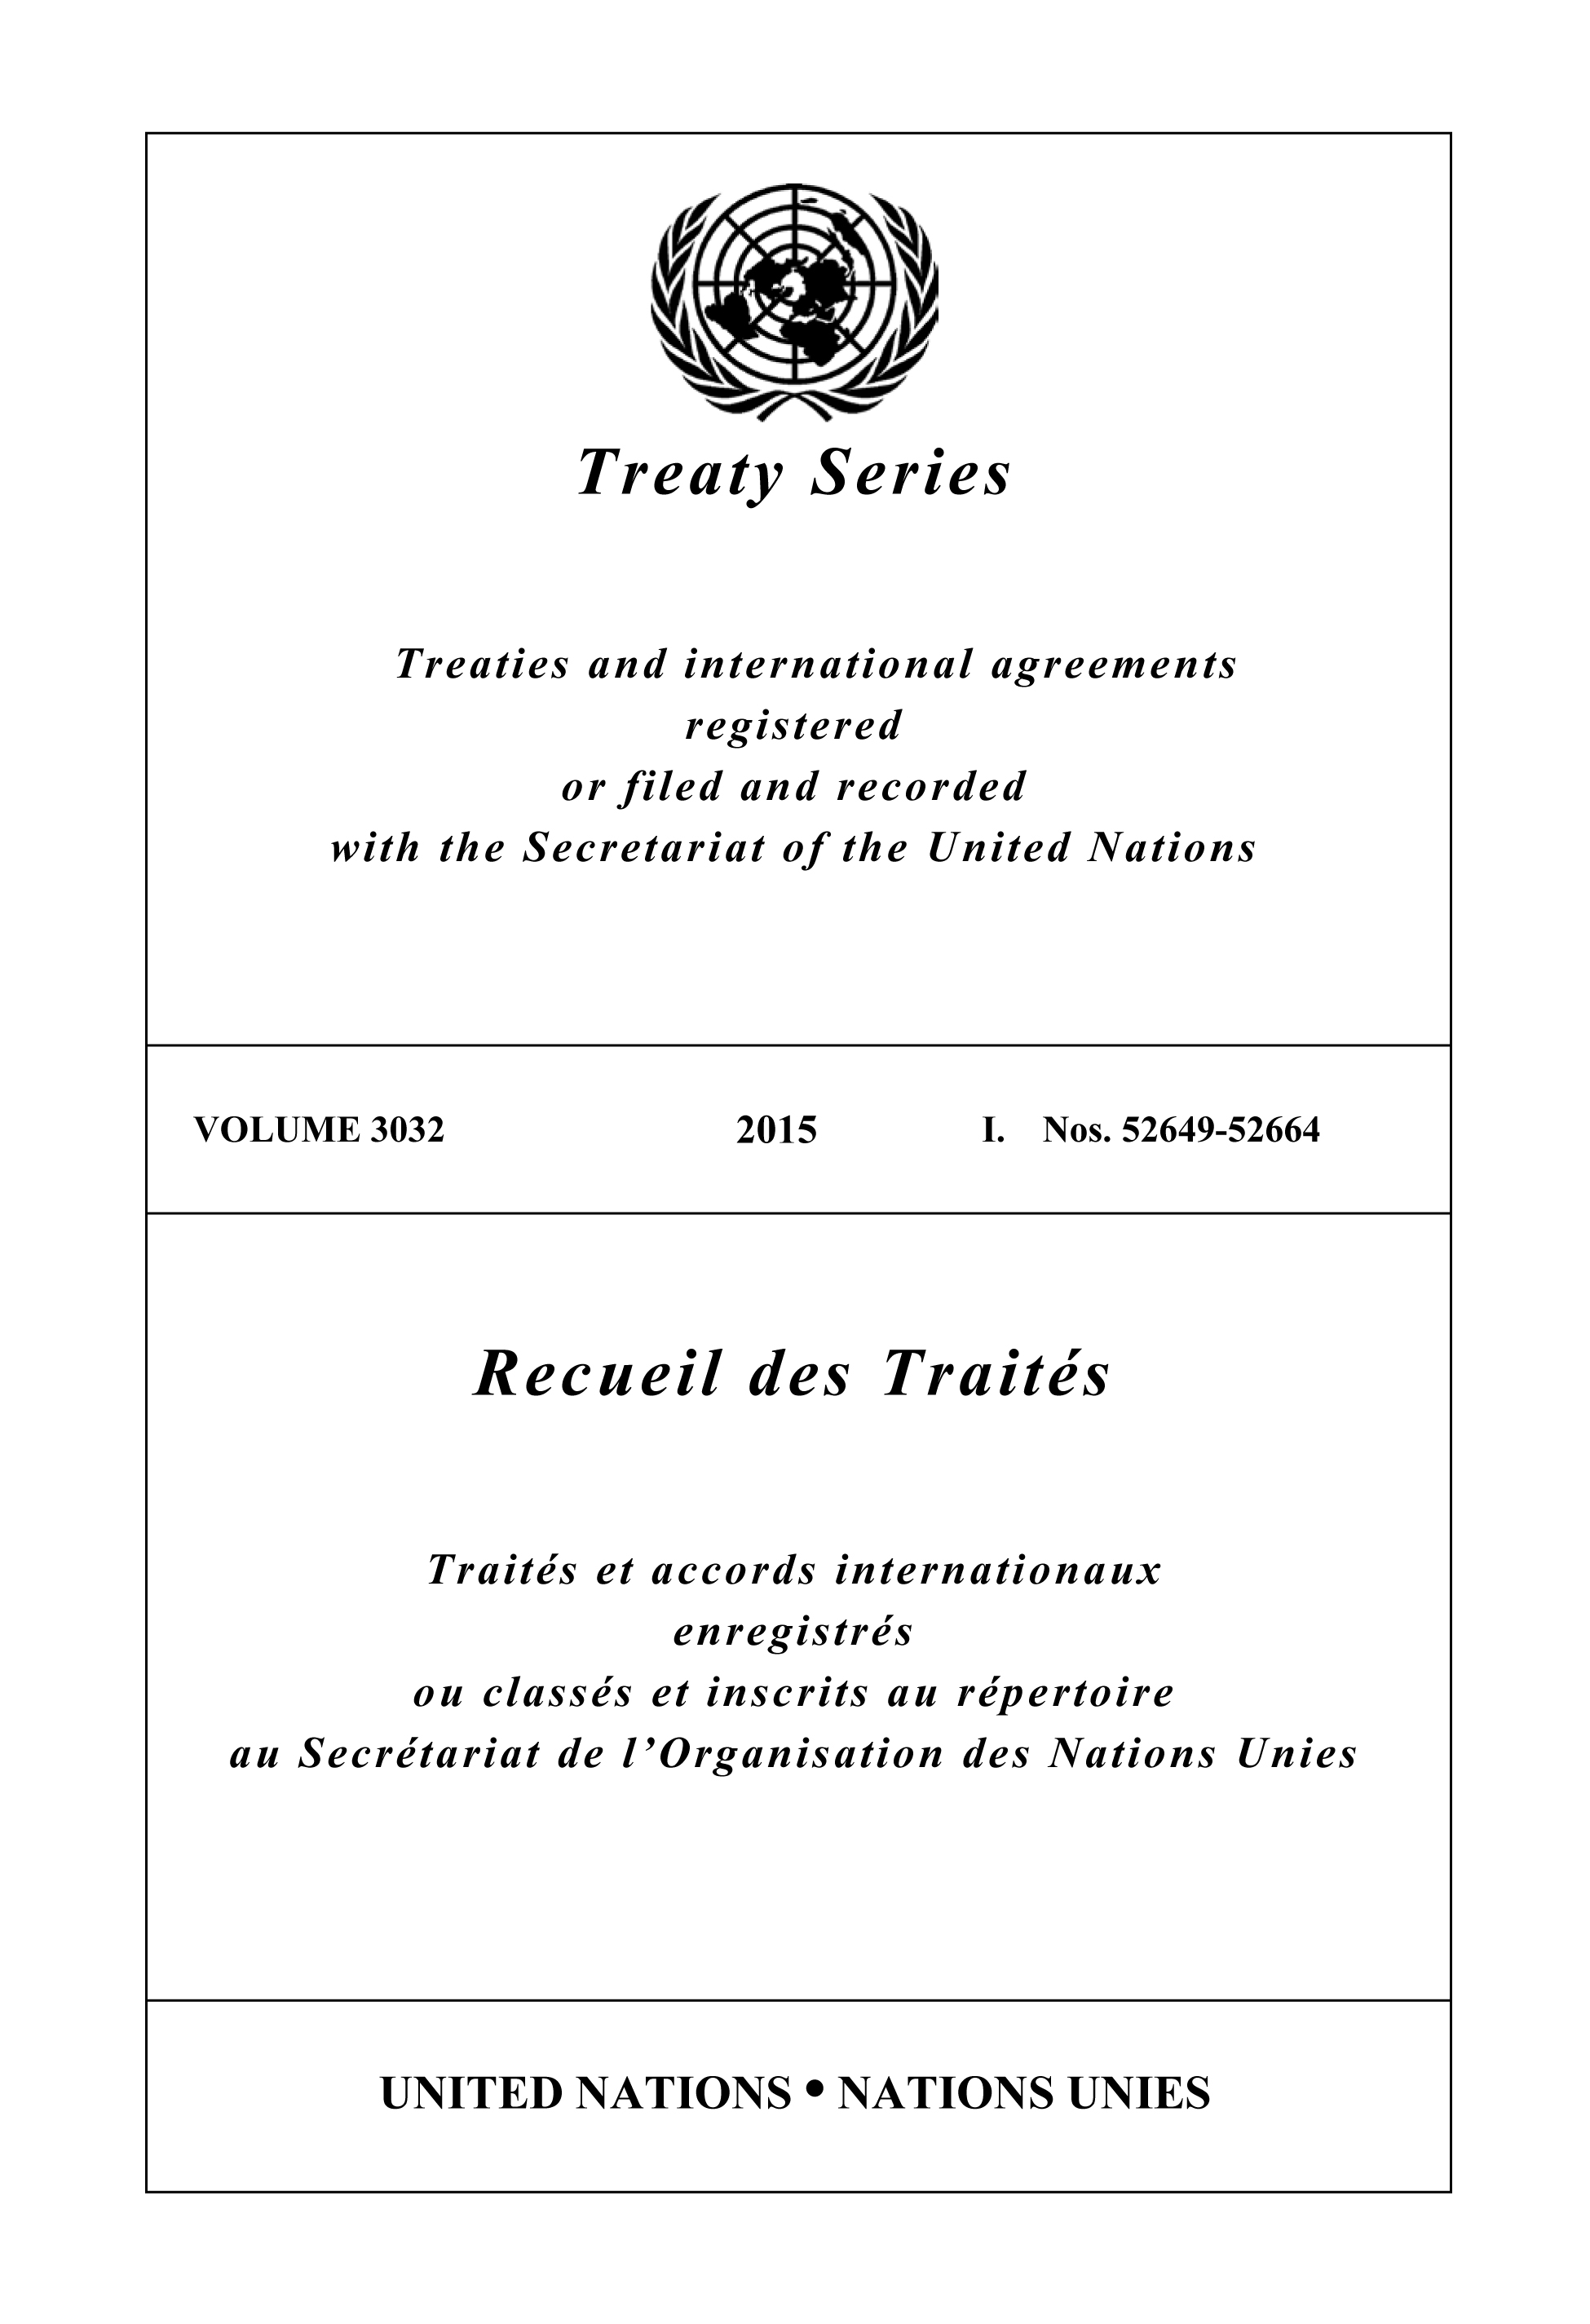 image of Treaty Series 3032